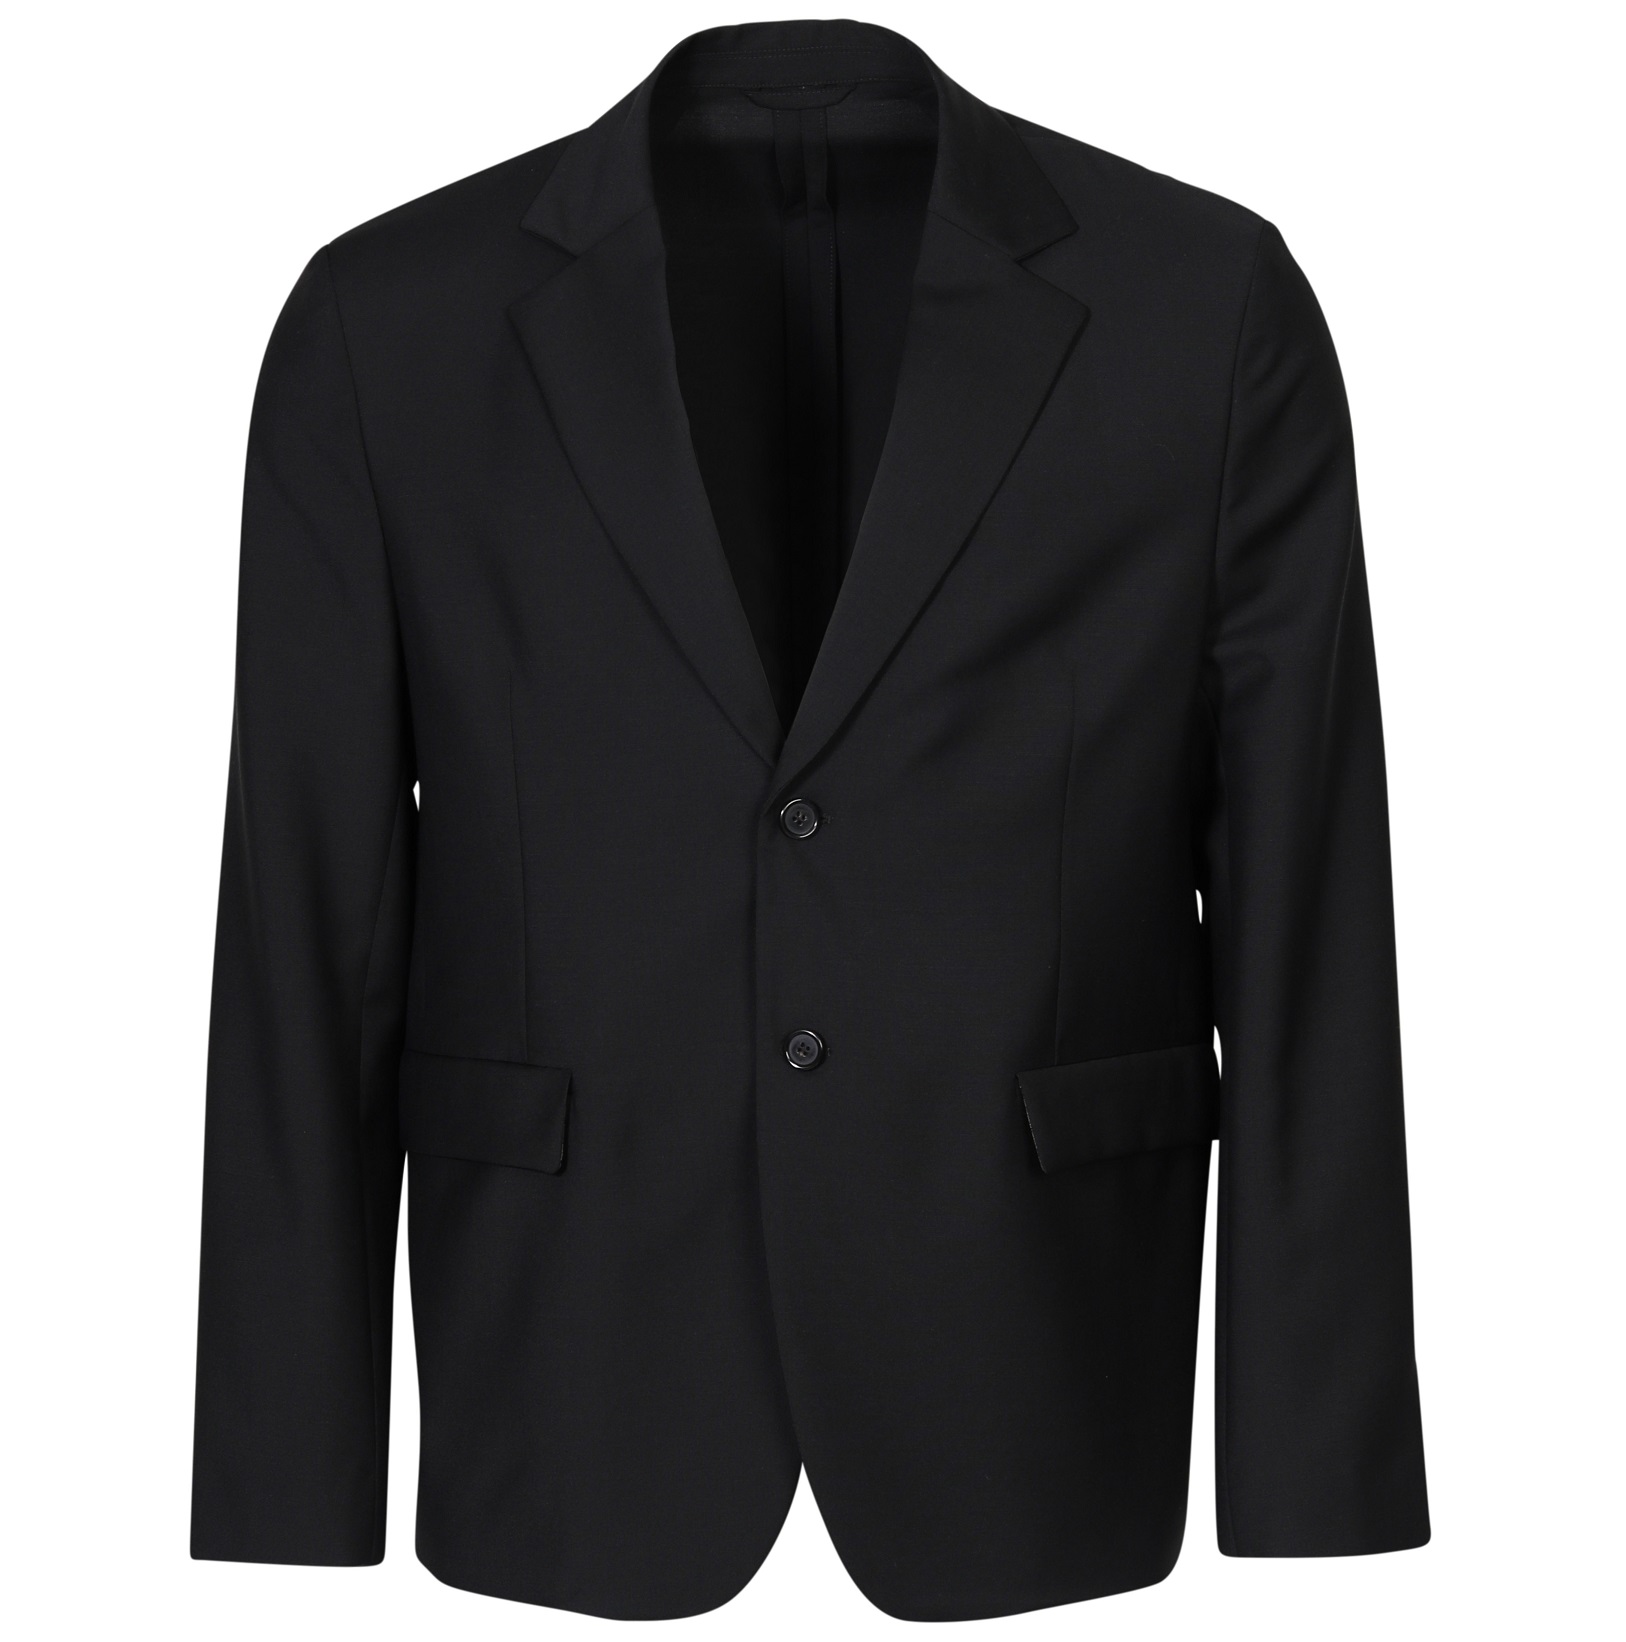 ACNE STUDIOS Suit Jacket in Black 52